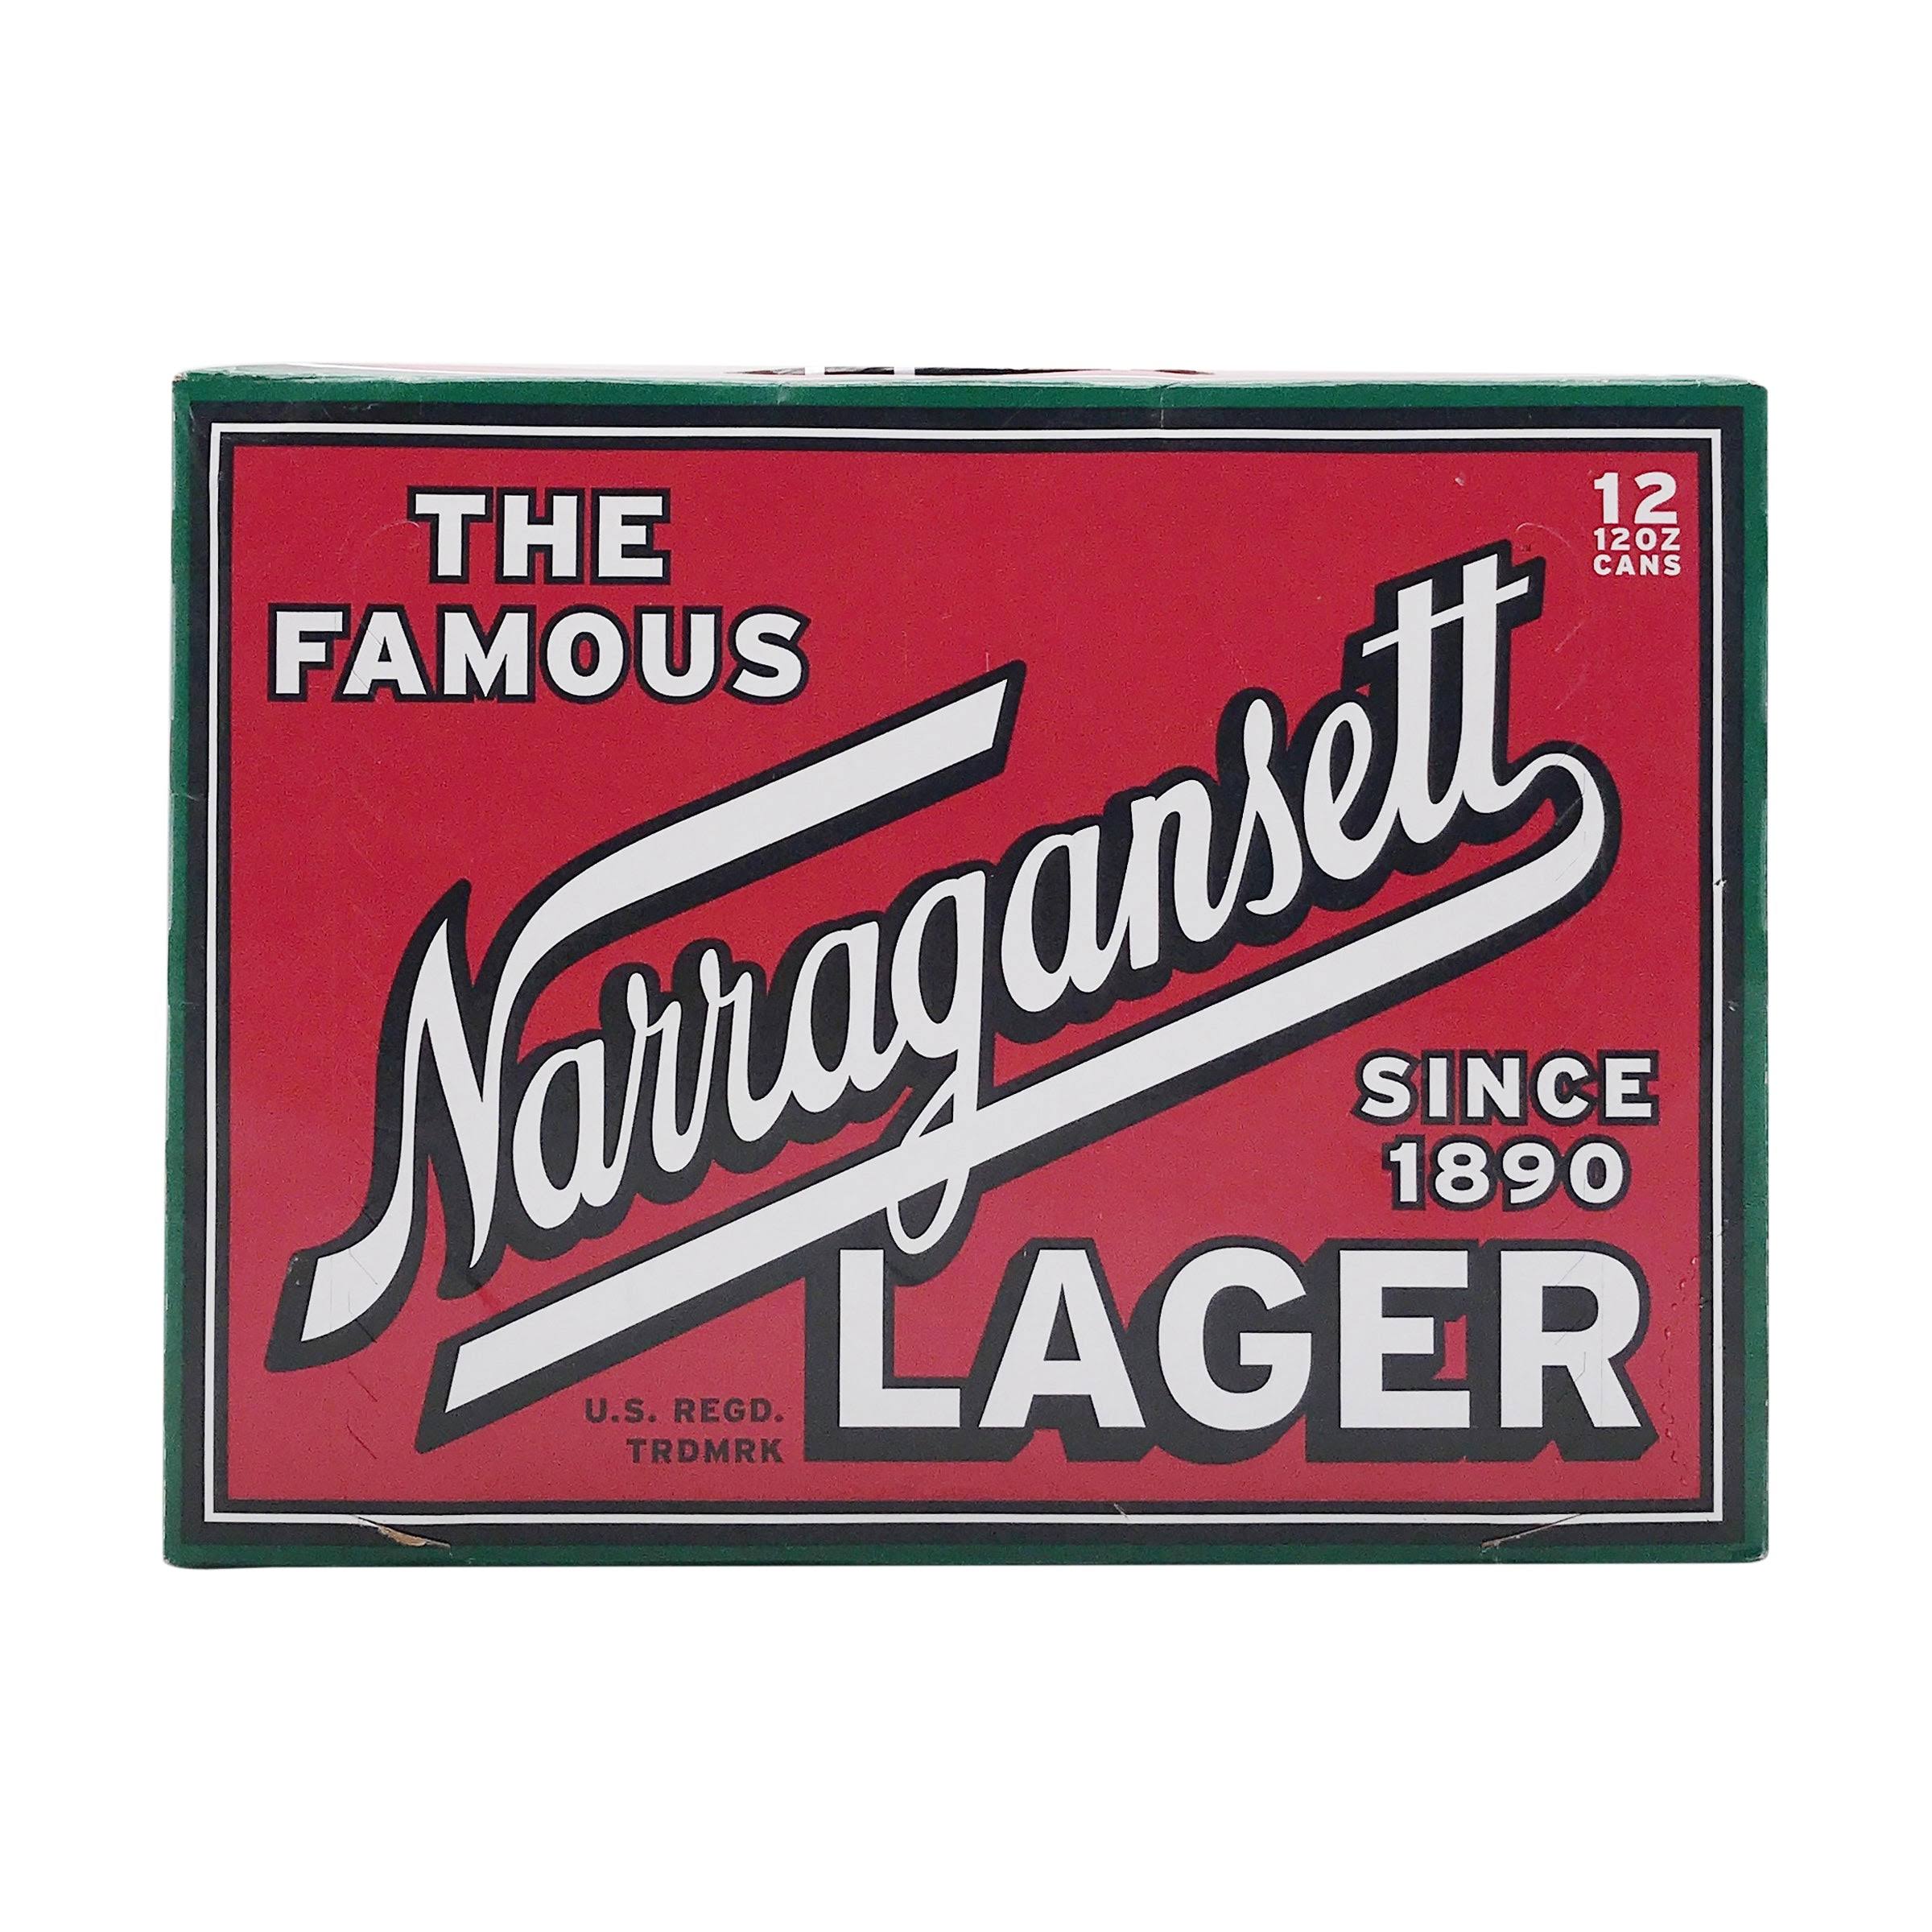 Narragansett Lager - 12 pack, 12 oz cans